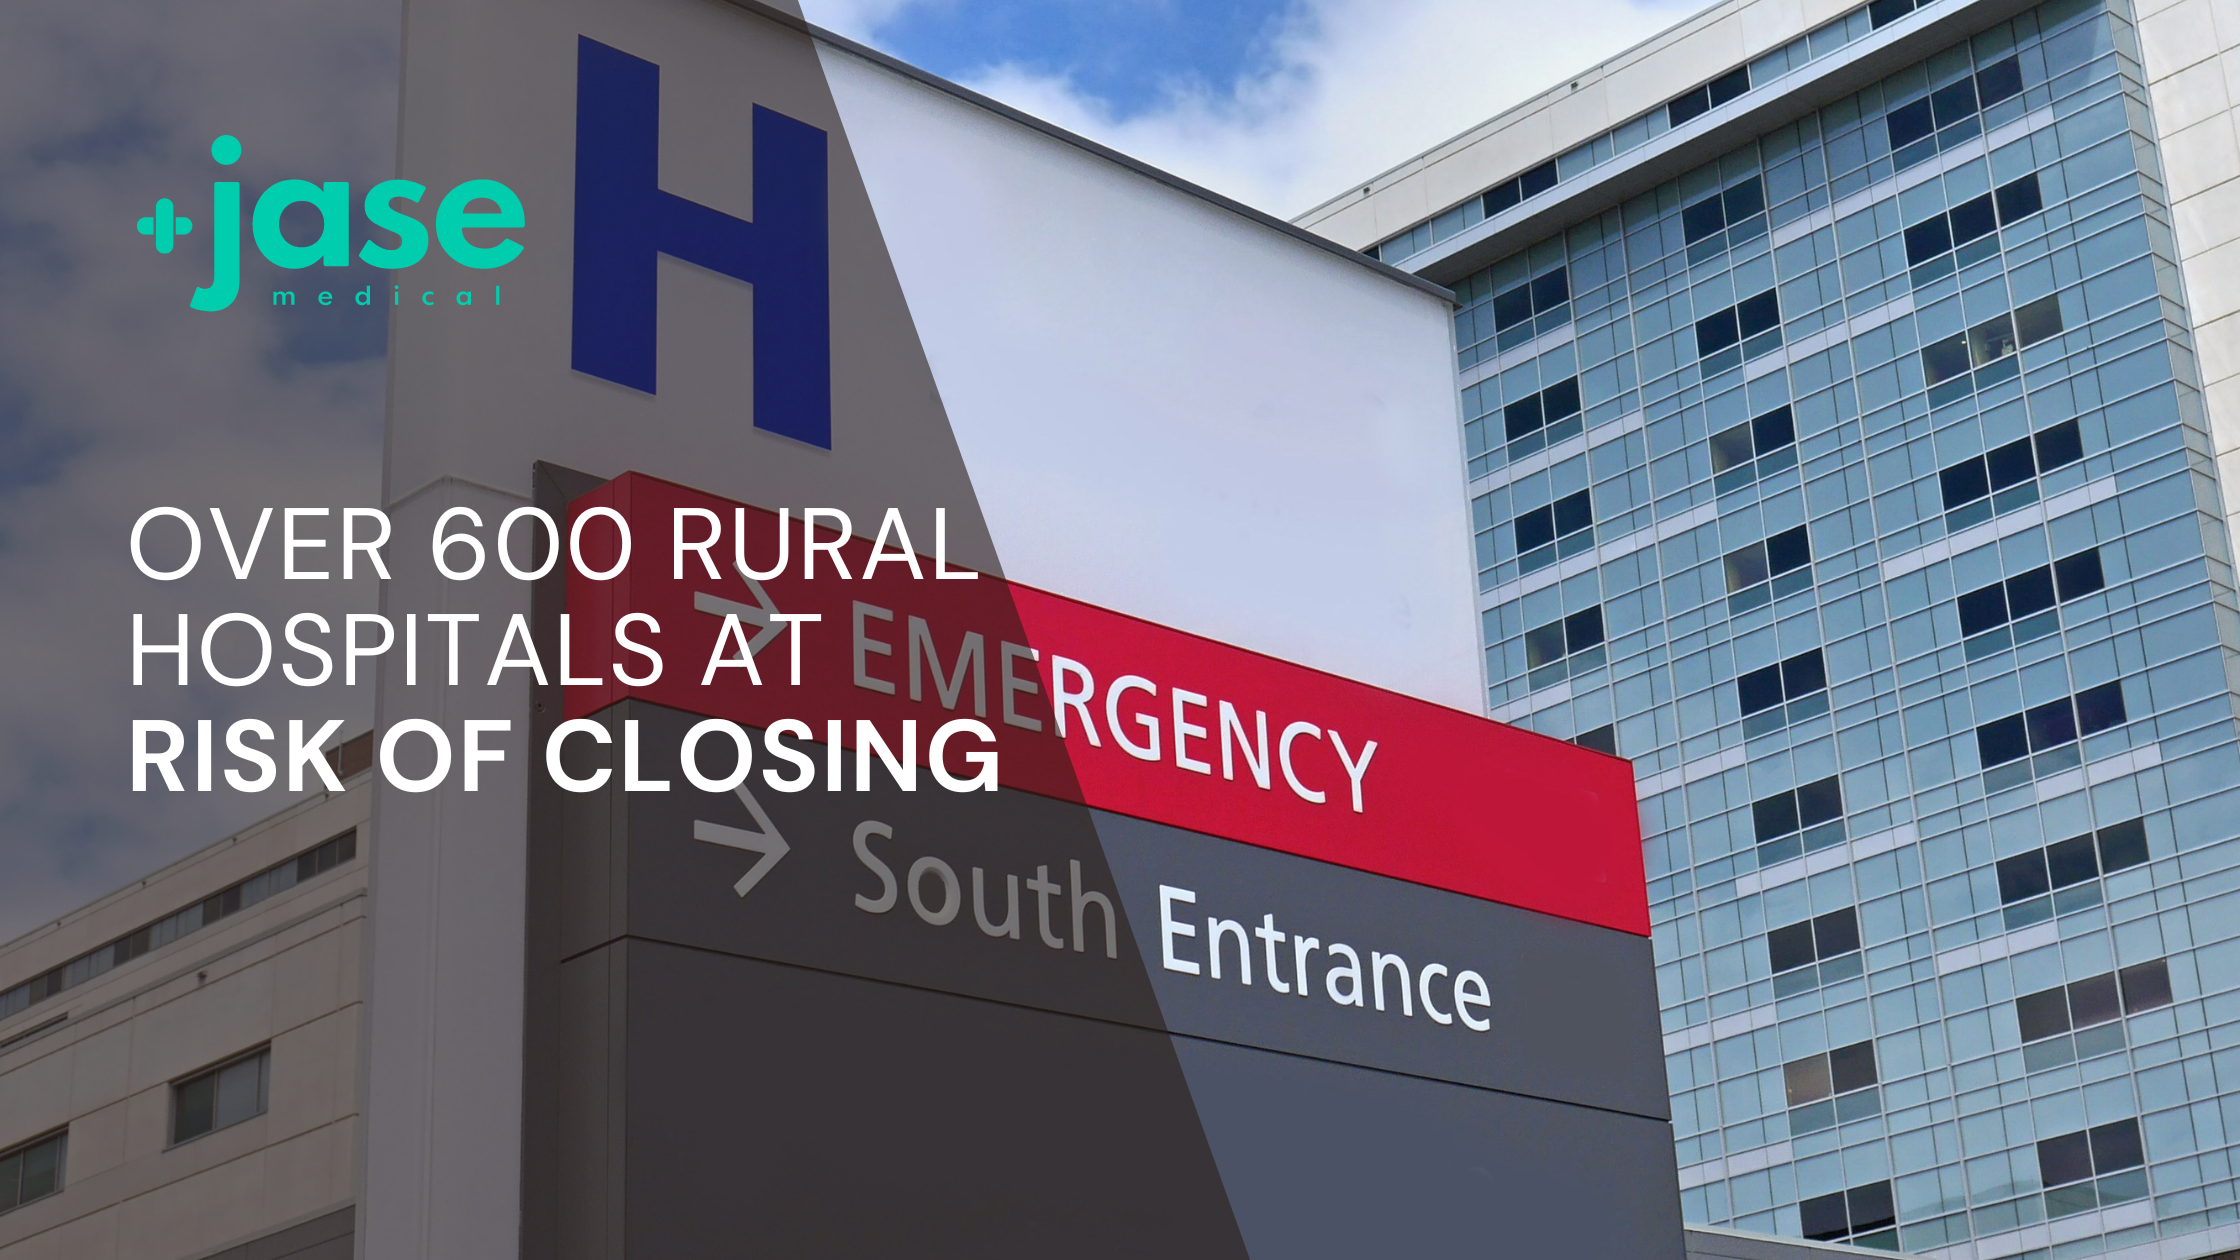 Over 600 Rural Hospitals at Risk of Closing